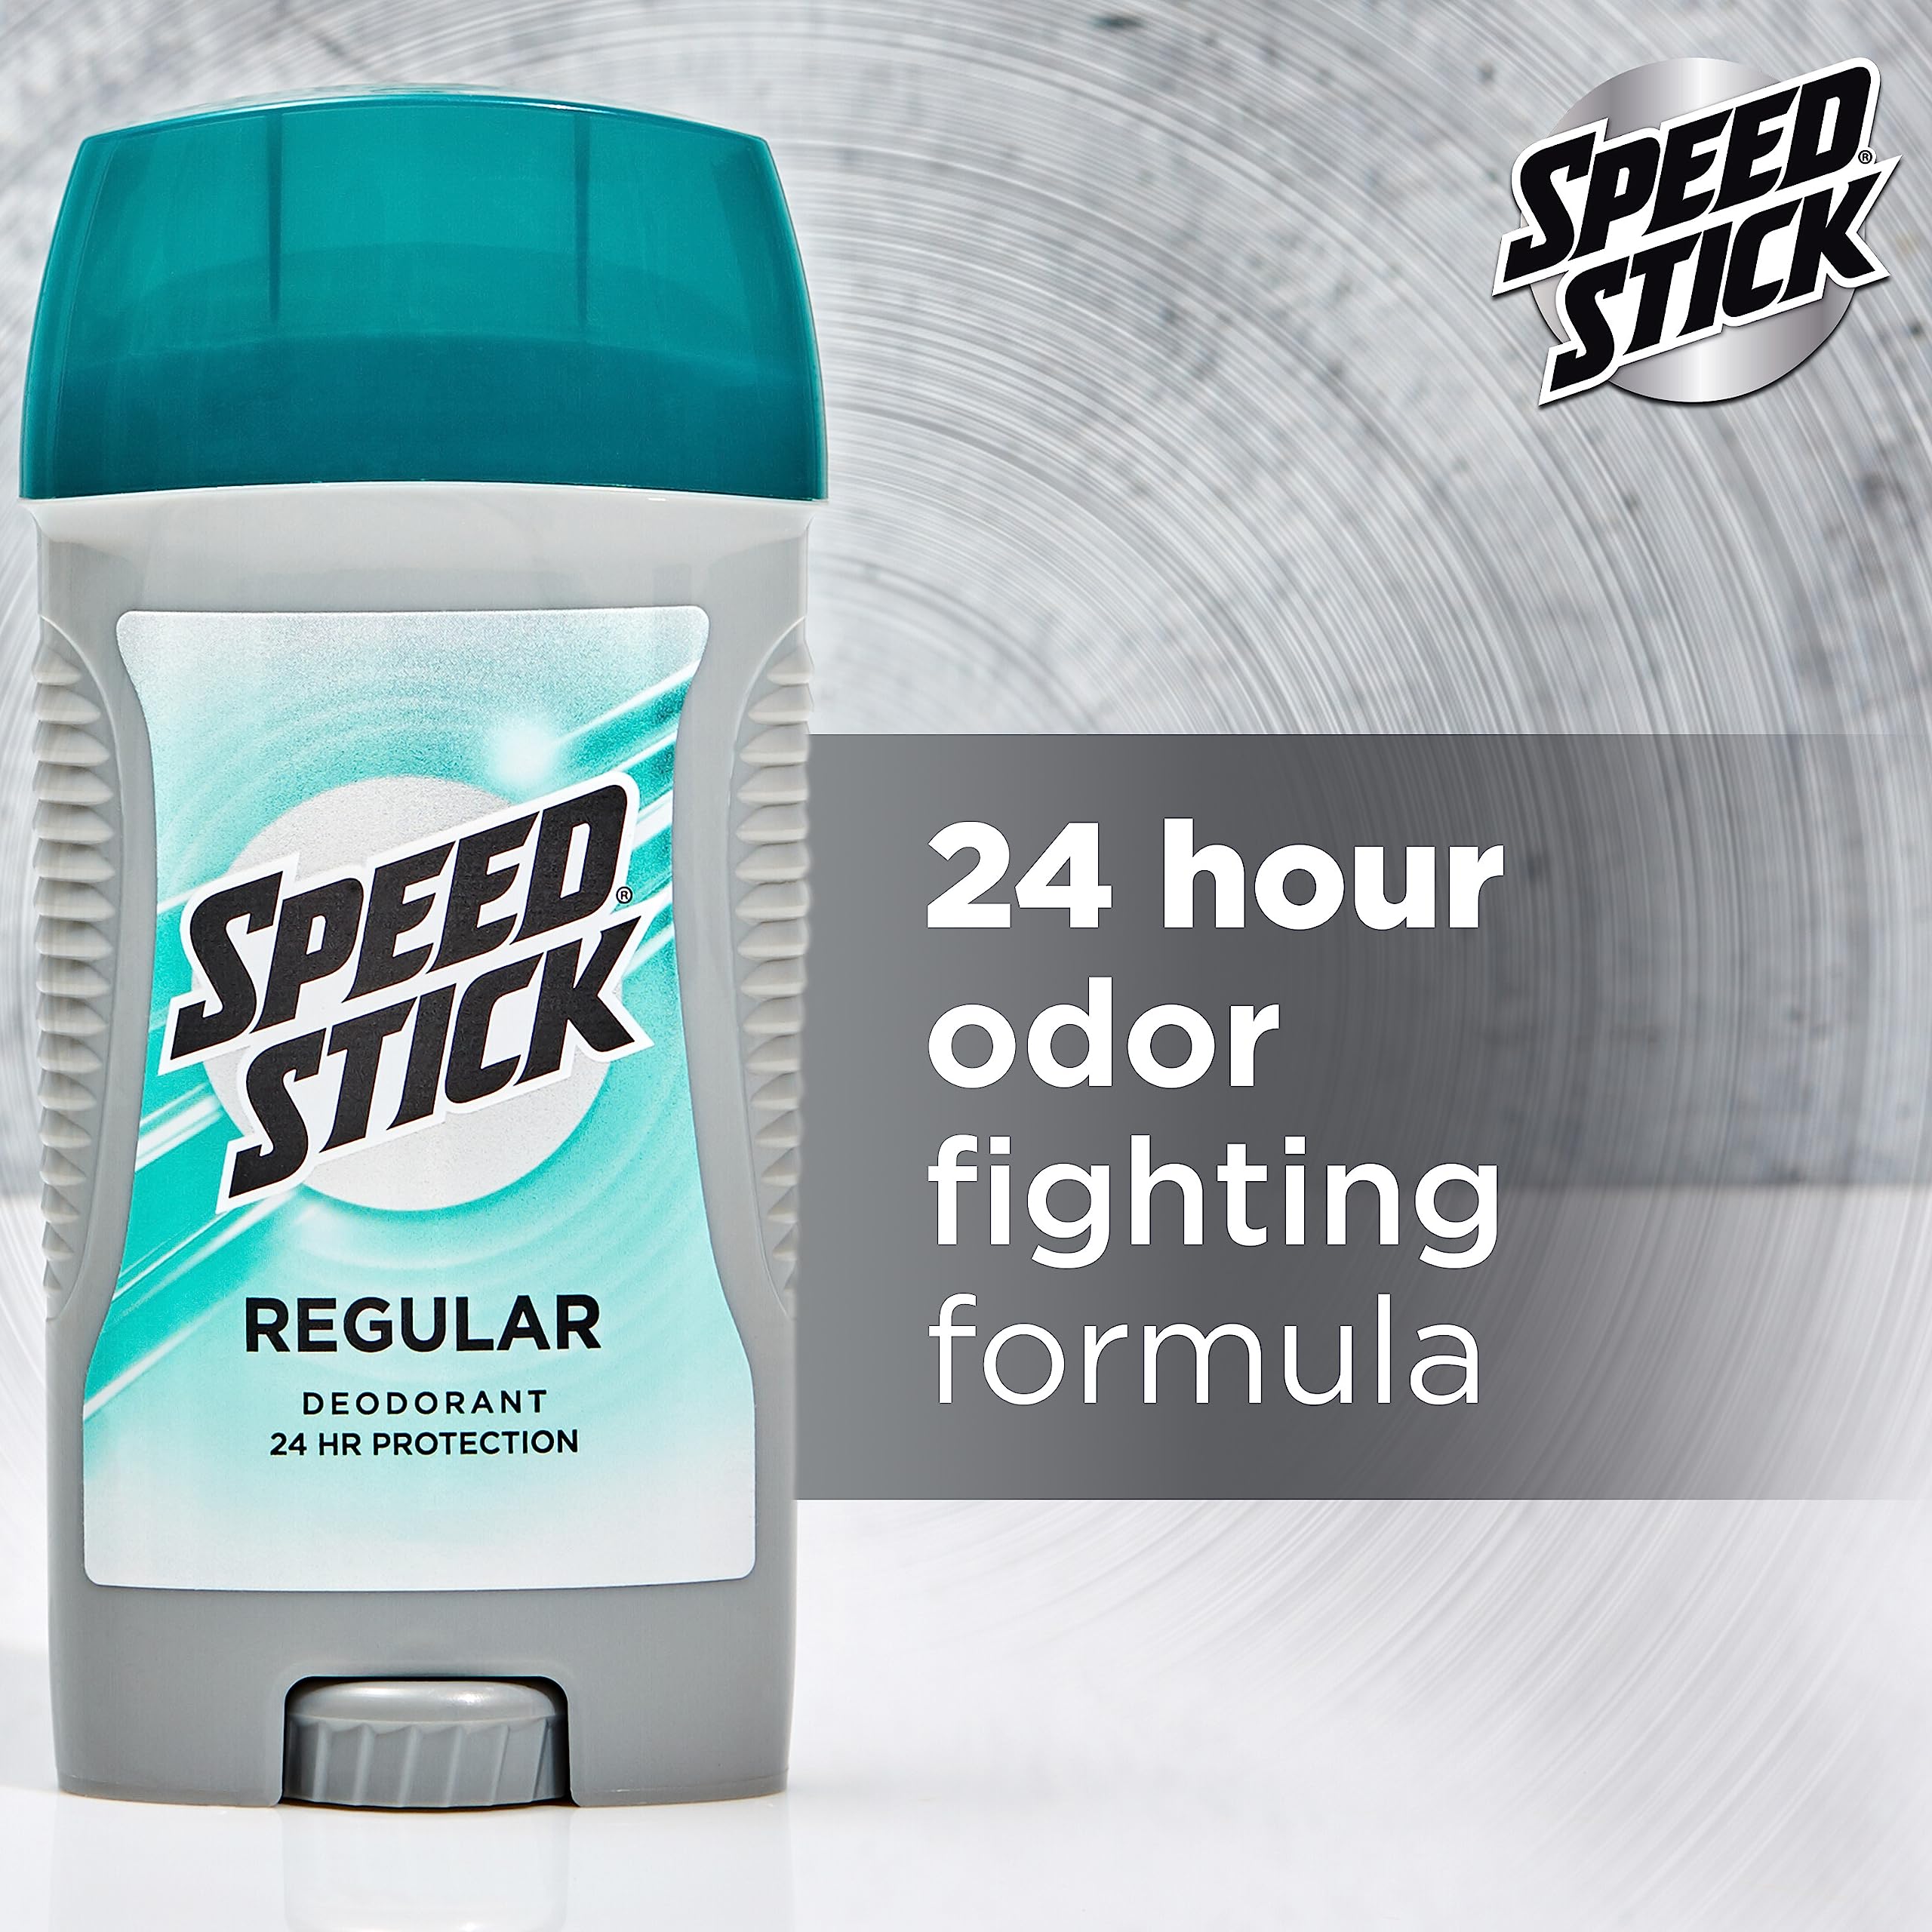 Speed Stick Men's Deodorant, Regular, 3 Ounce, 4 Pack